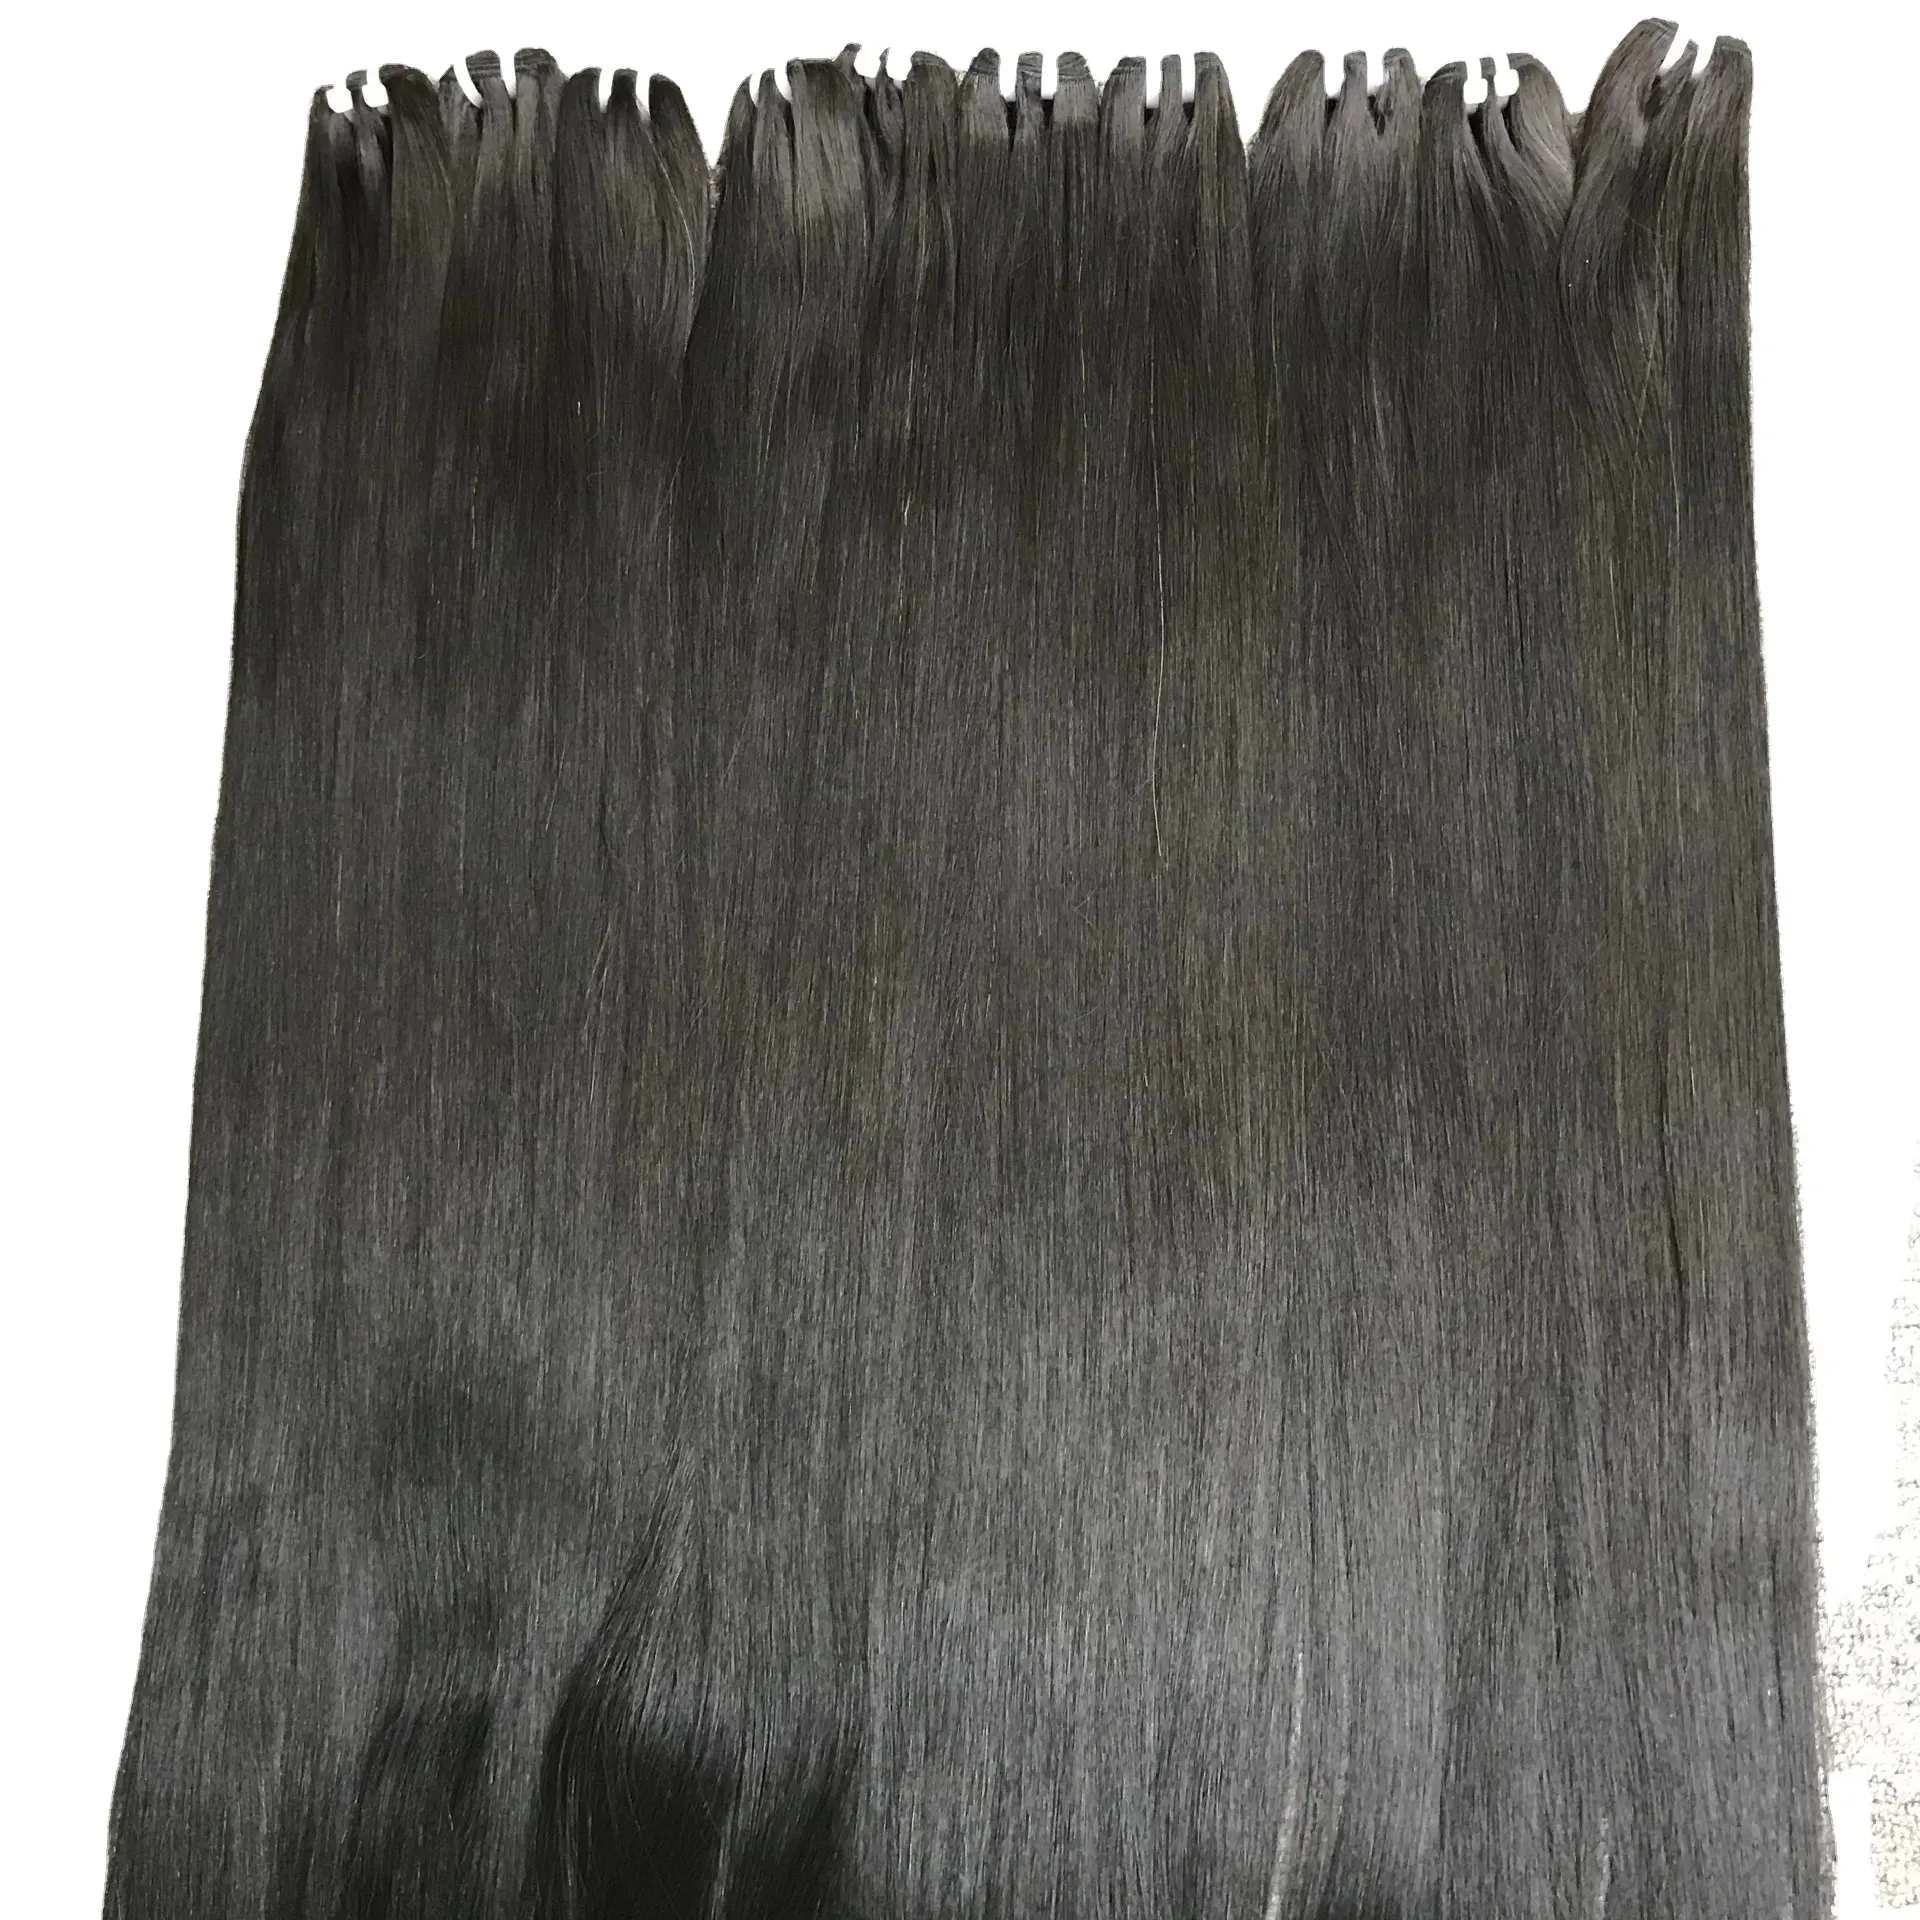 2023 Bone Straight Hd Full Lace Wig 100% Raw Vietnamese Raw Cambodian Natural Hair Wholesale Price Hair Express UPS DHL FEDEX